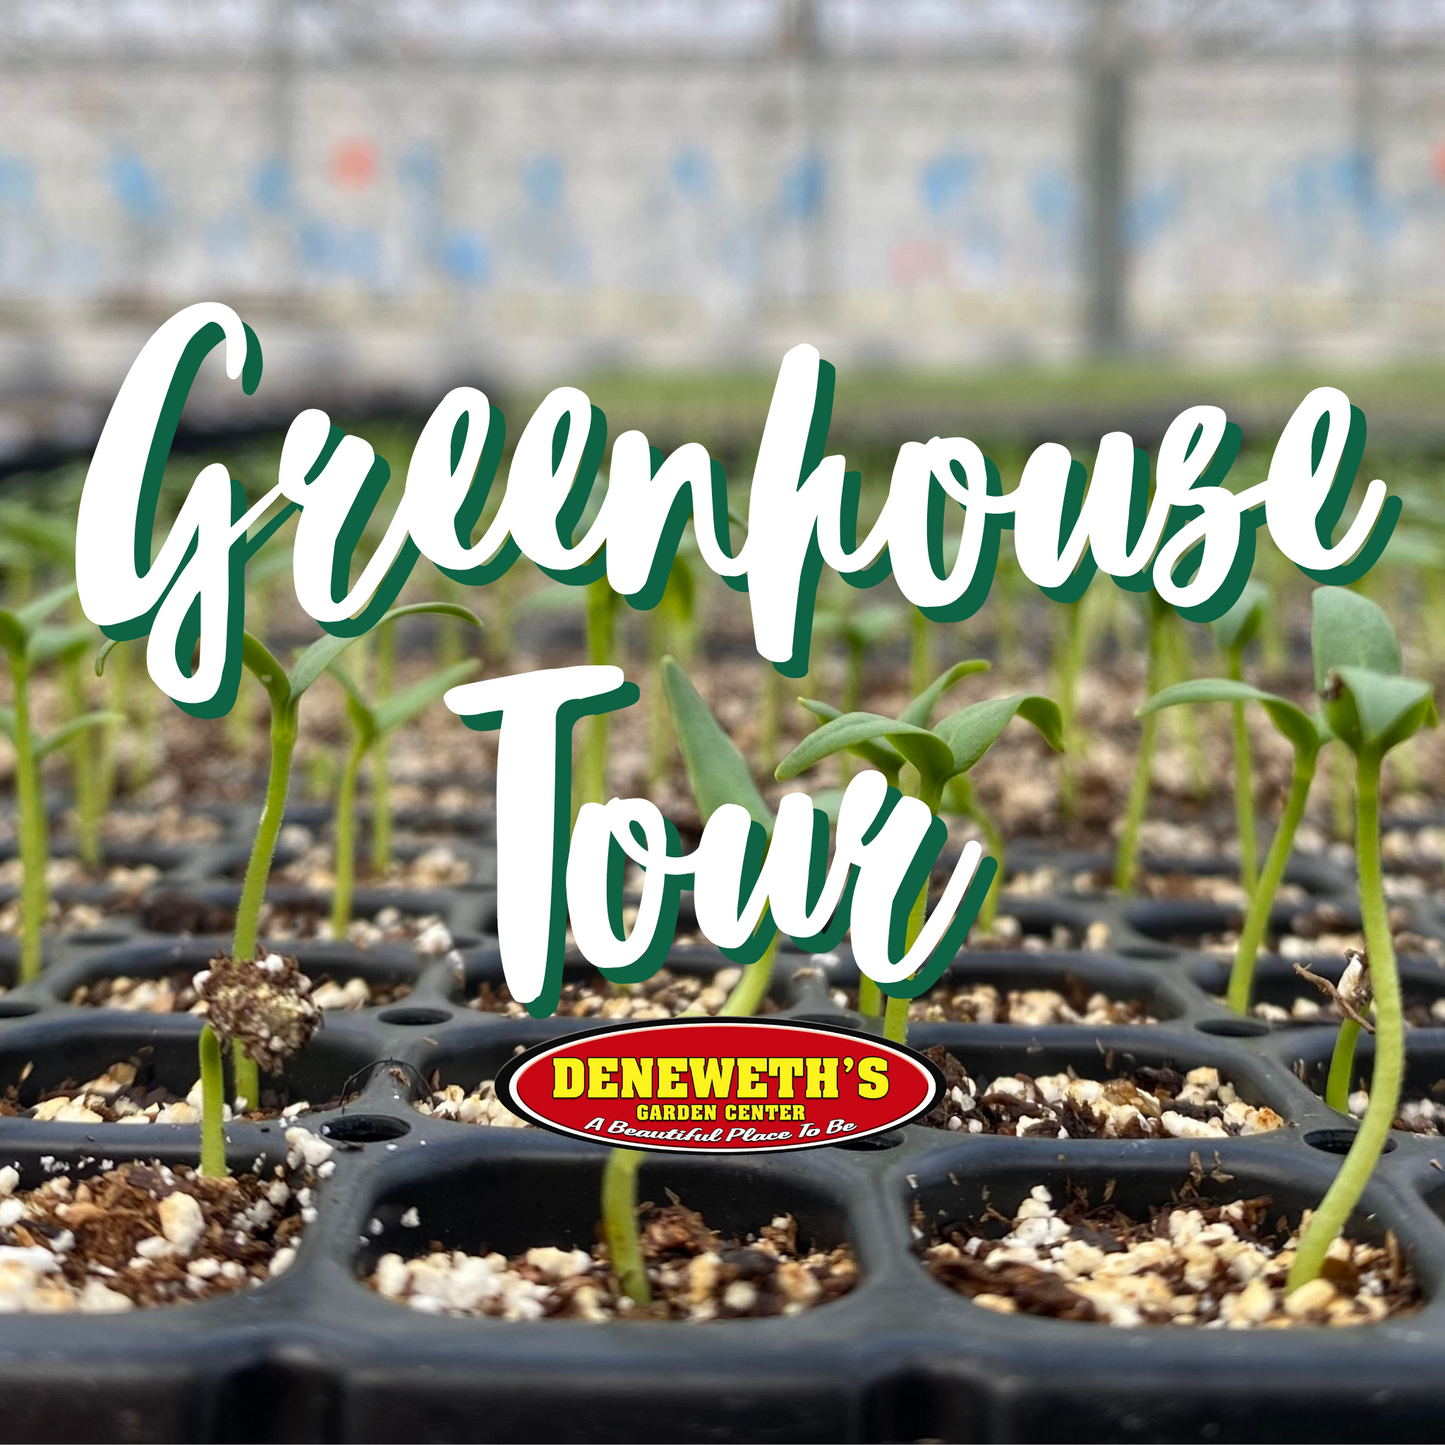 Greenhouse Tour